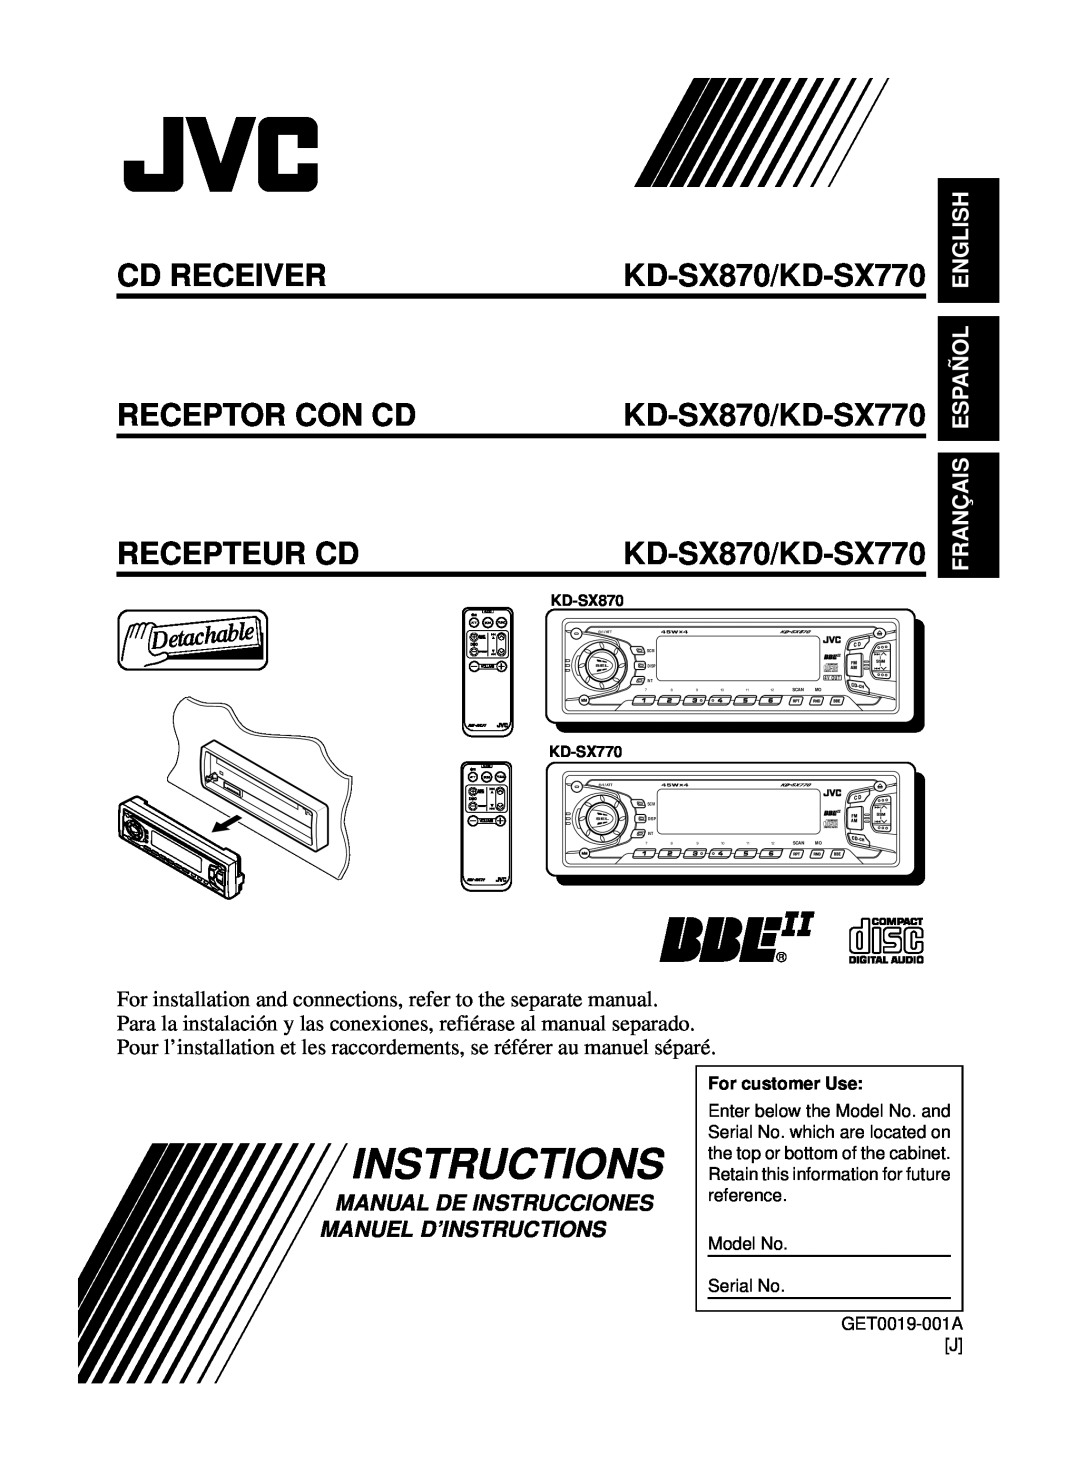 JVC manual Instructions, English, Español, Français, Cd Receiver Receptor Con Cd Recepteur Cd, KD-SX870/KD-SX770 